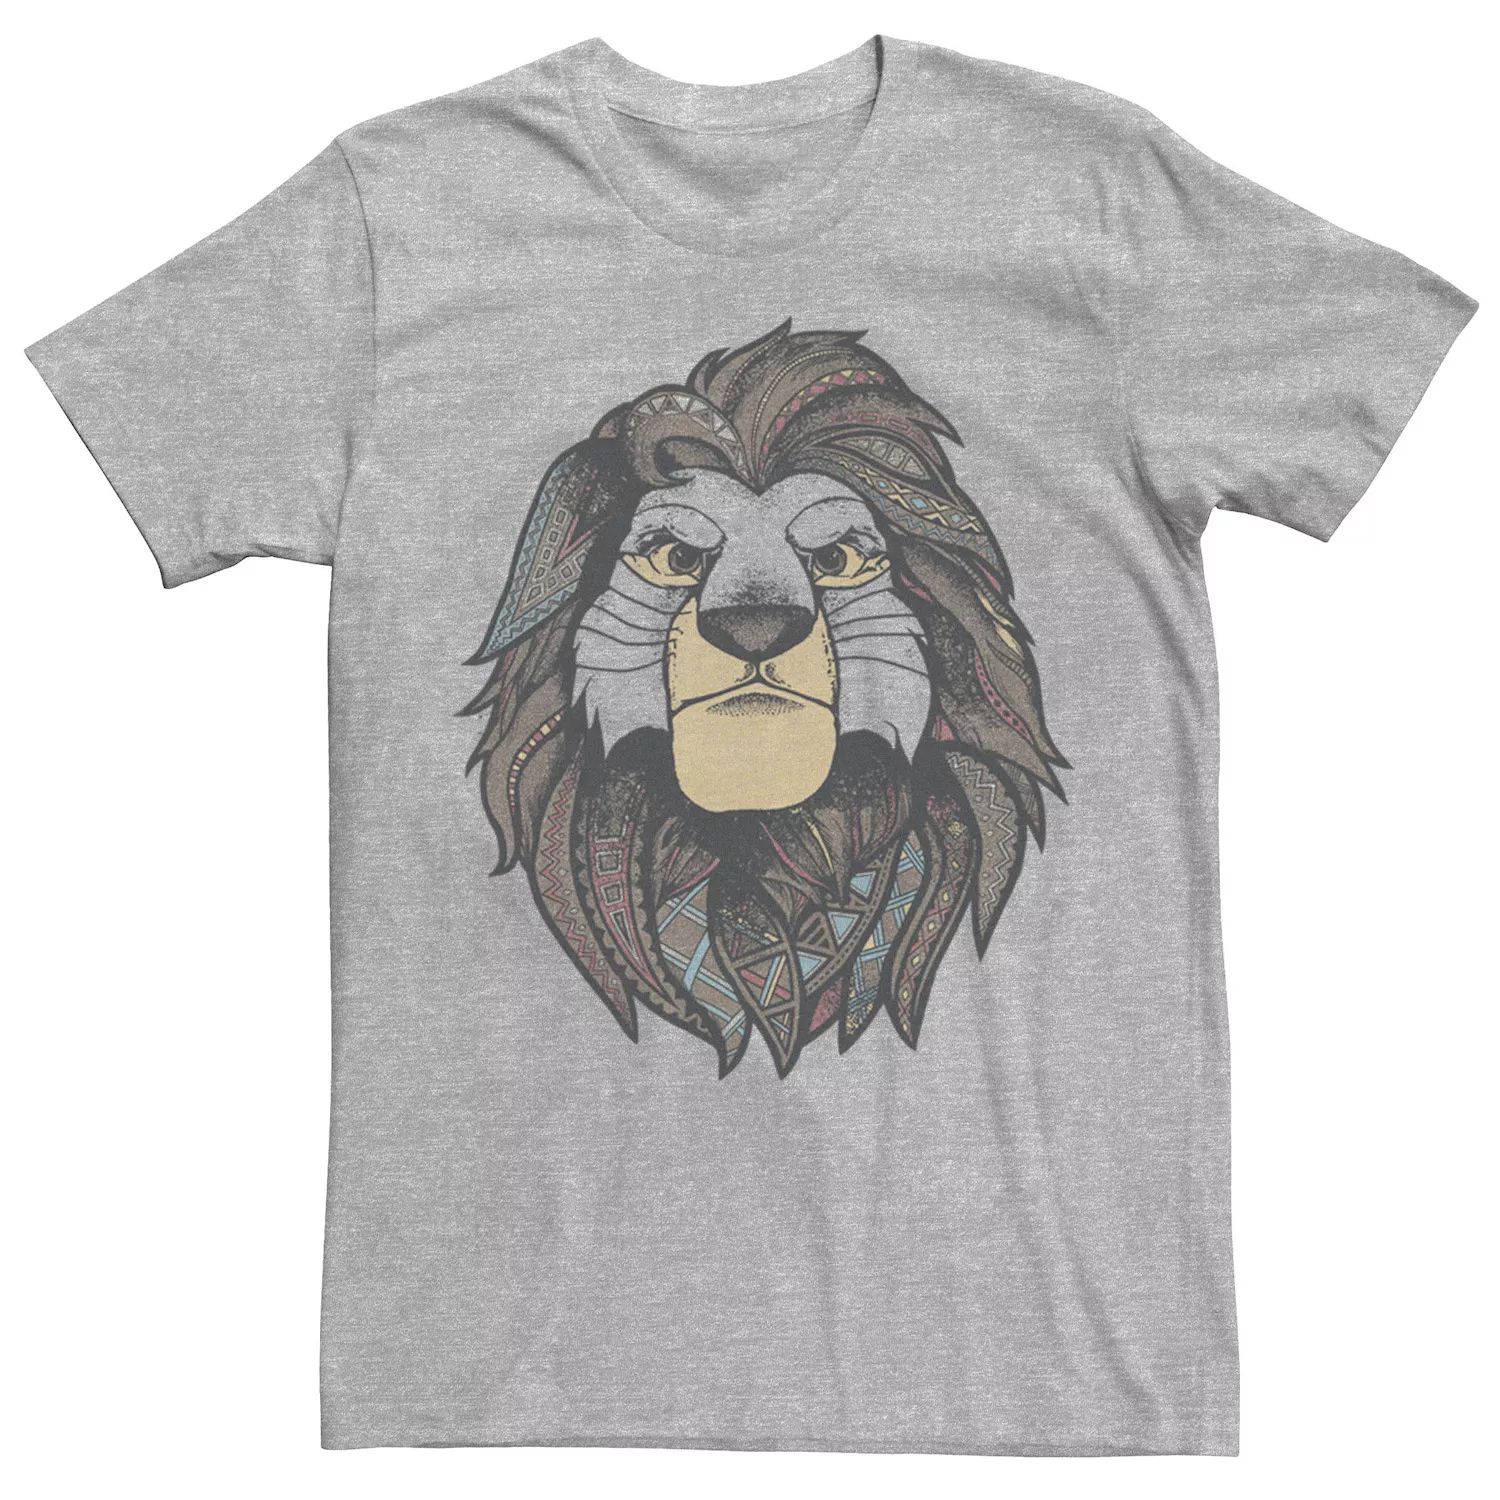 Мужская футболка The Lion King с геометрическим узором Mane Disney